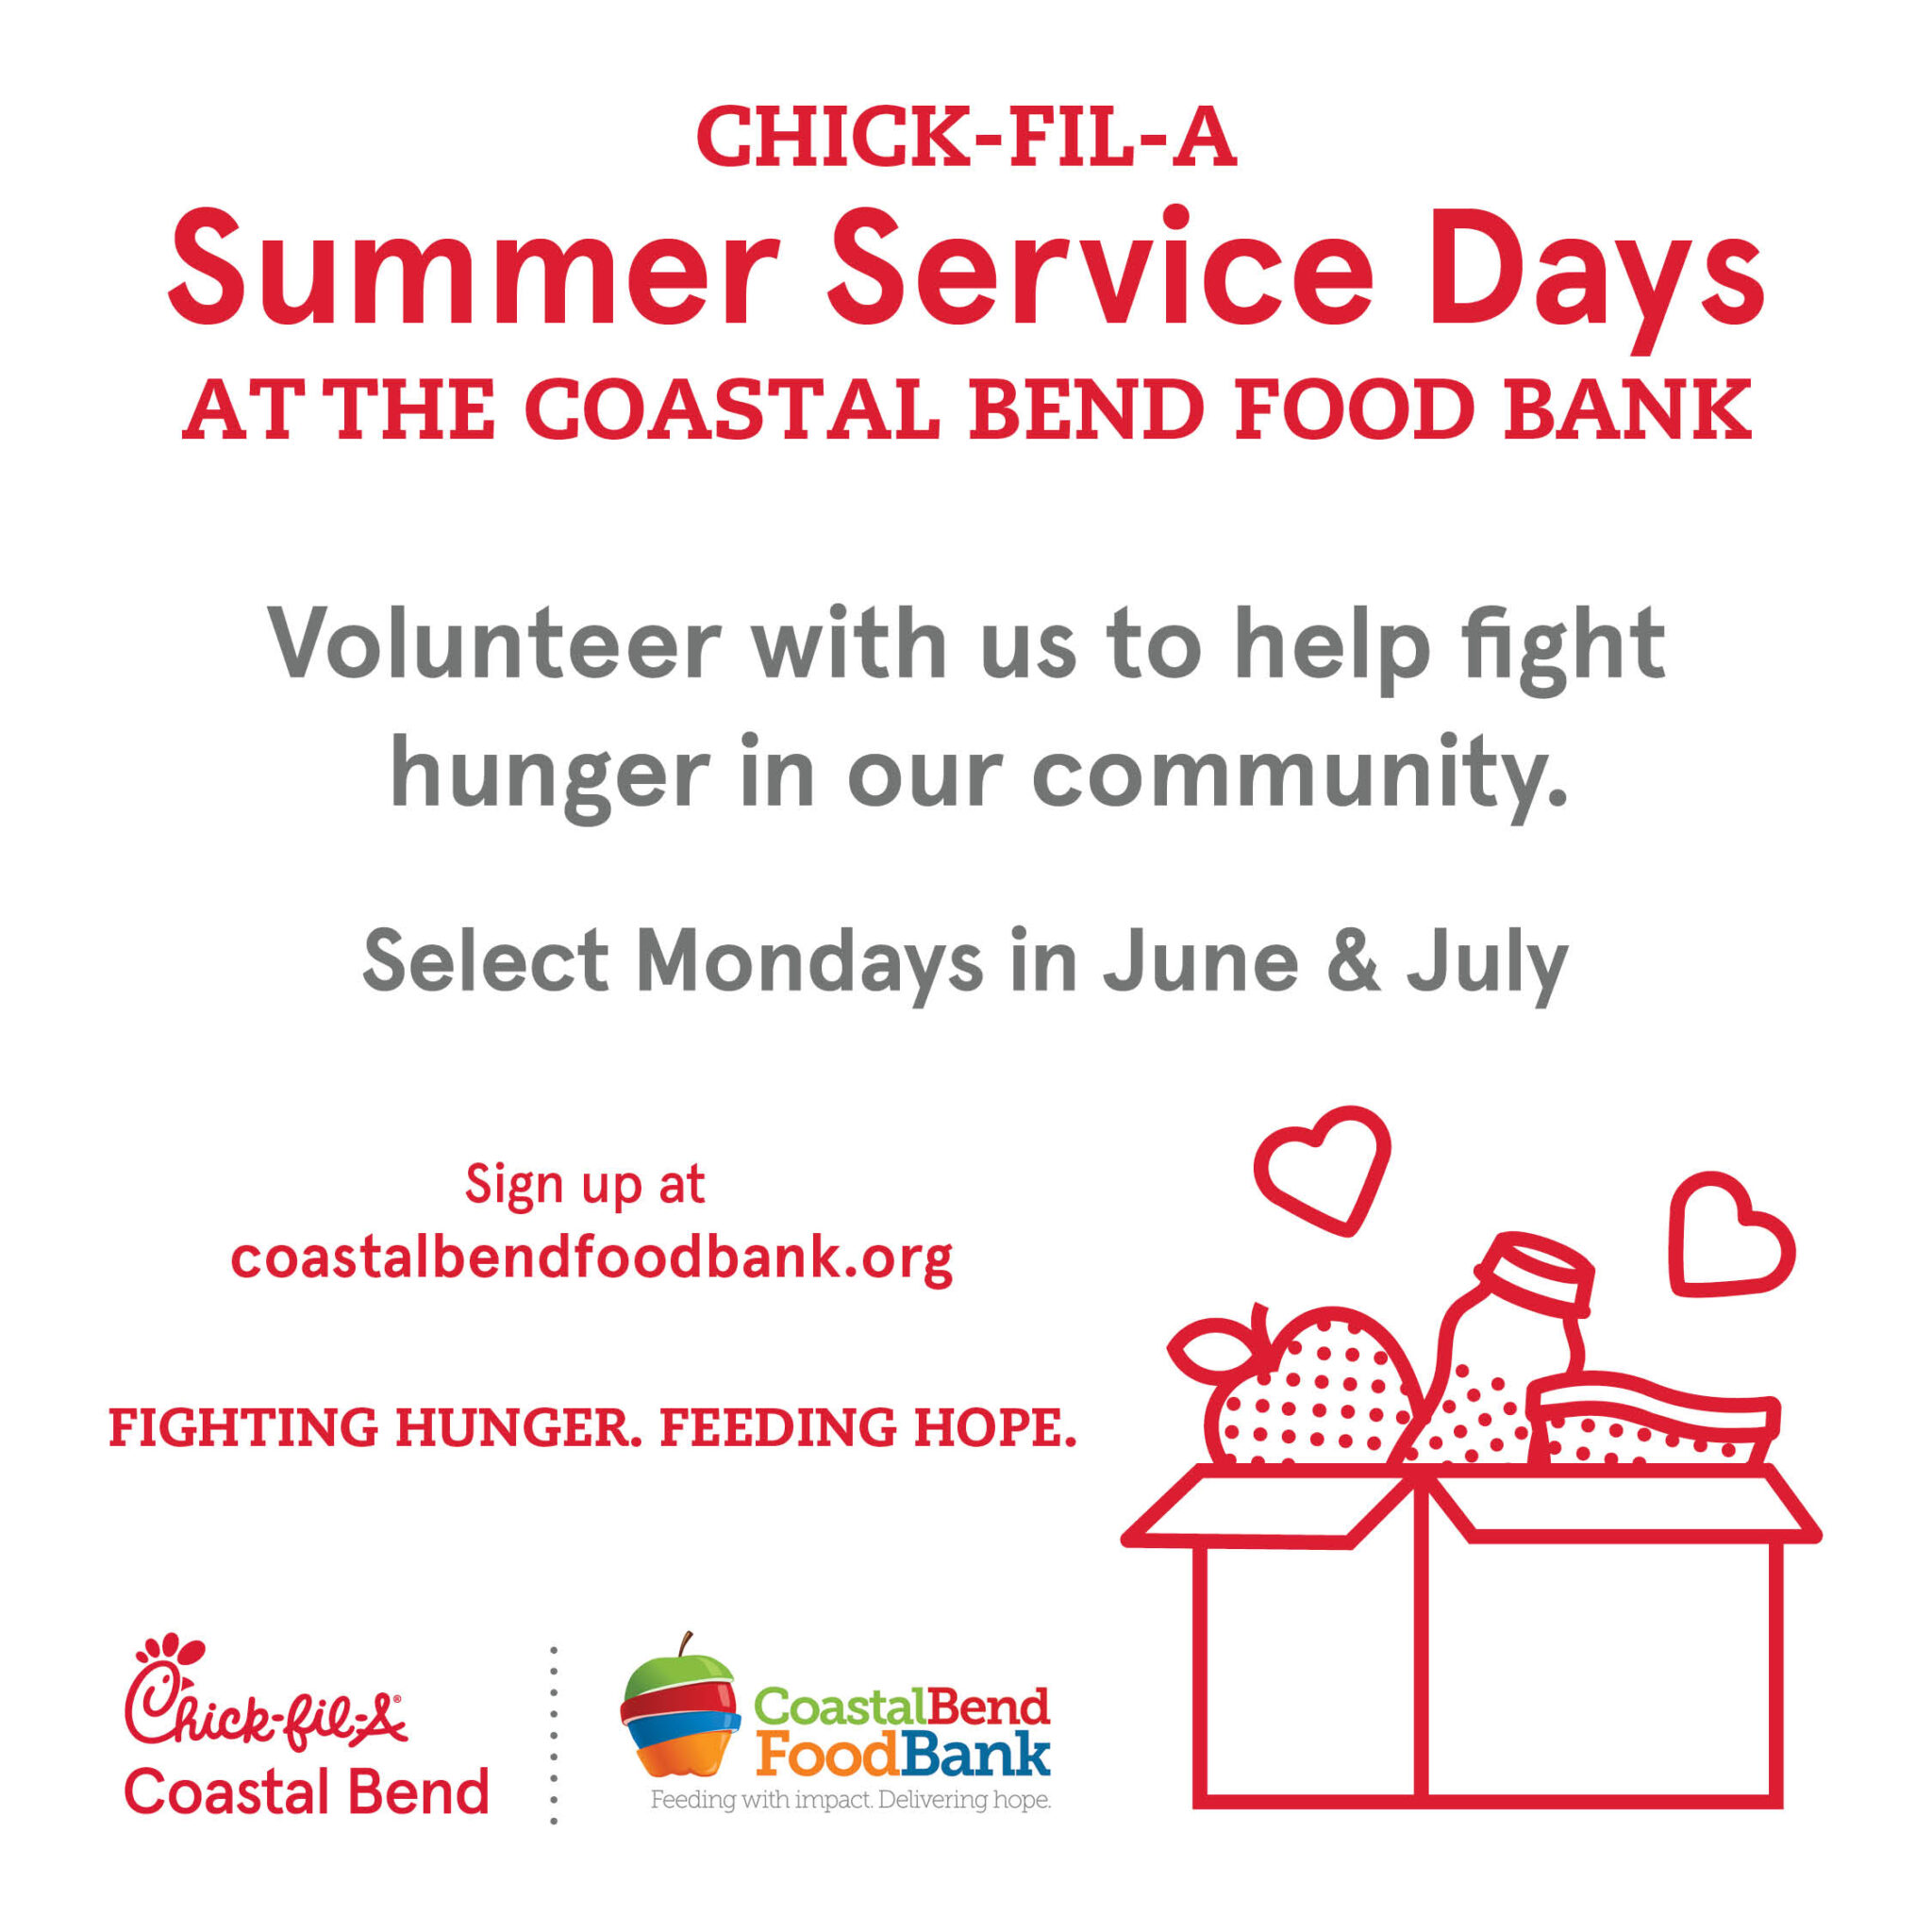 ChickFilA Summer Service Days Coastal Bend Food Bank